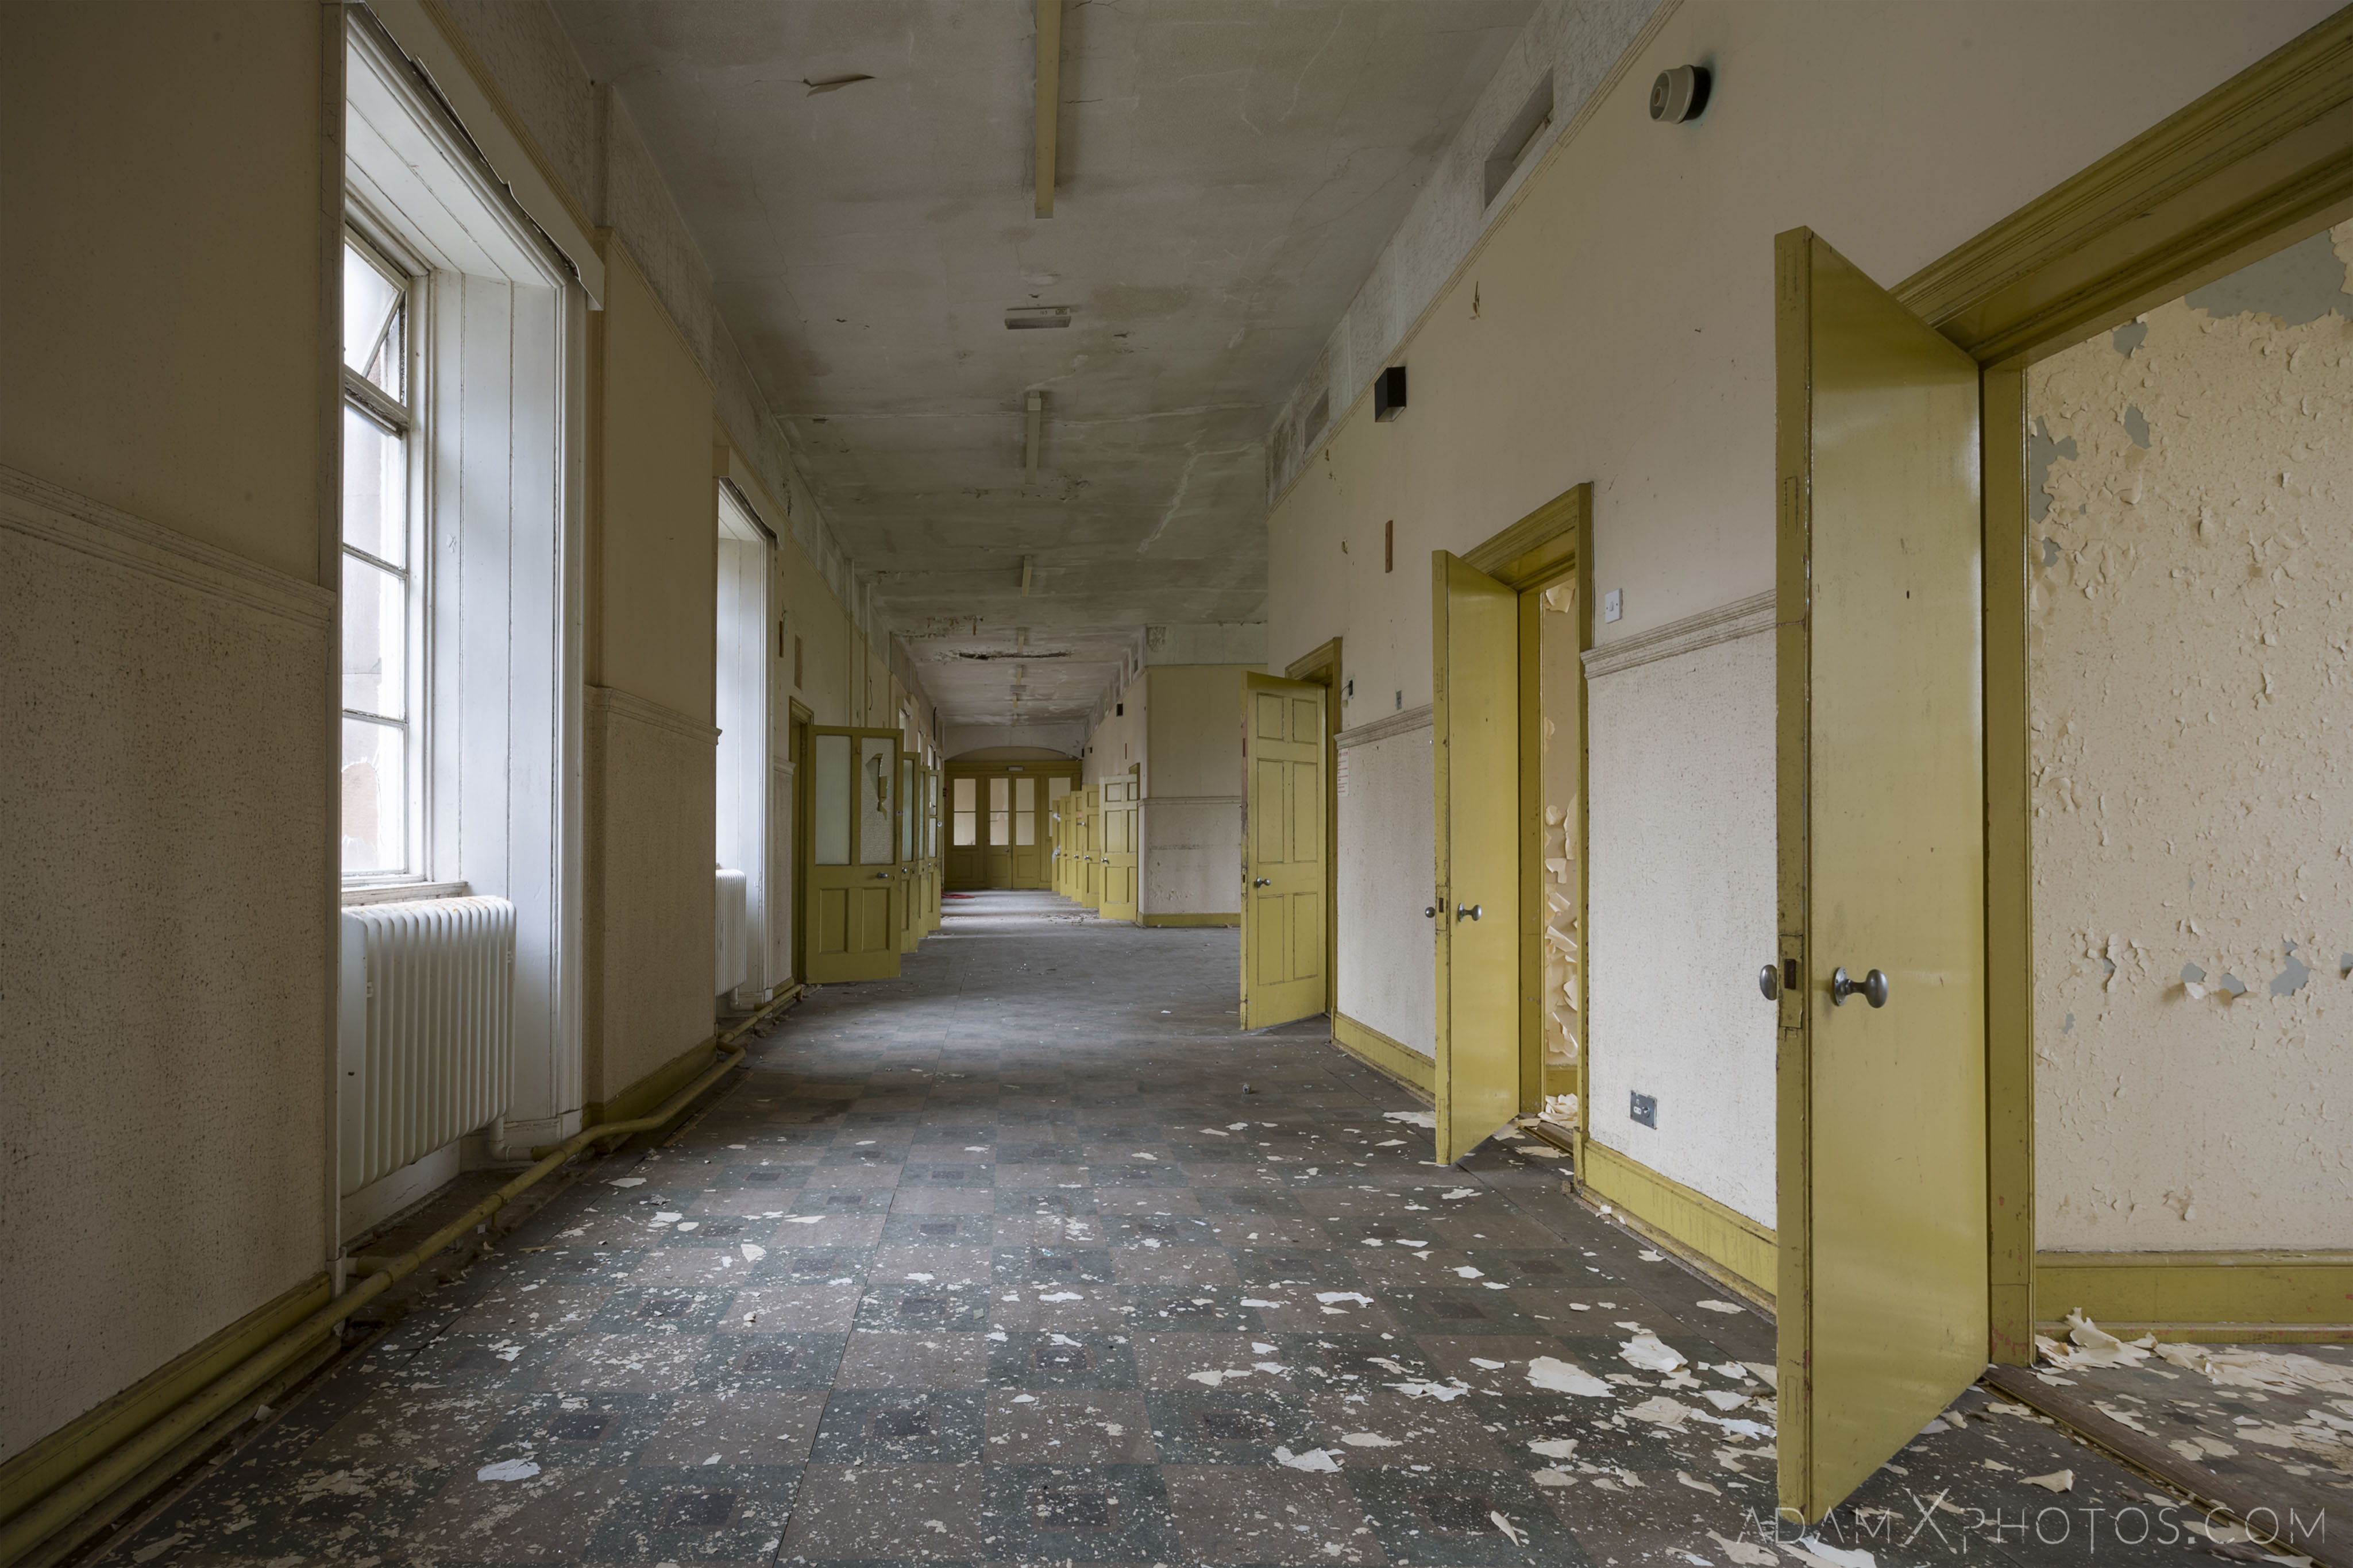 Corridor yellow wards Sunnyside Royal Hospital Montrose Scotland Adam X Urbex Urban Exploration Access 2018 Abandoned decay ruins lost forgotten derelict location creepy haunting eerie